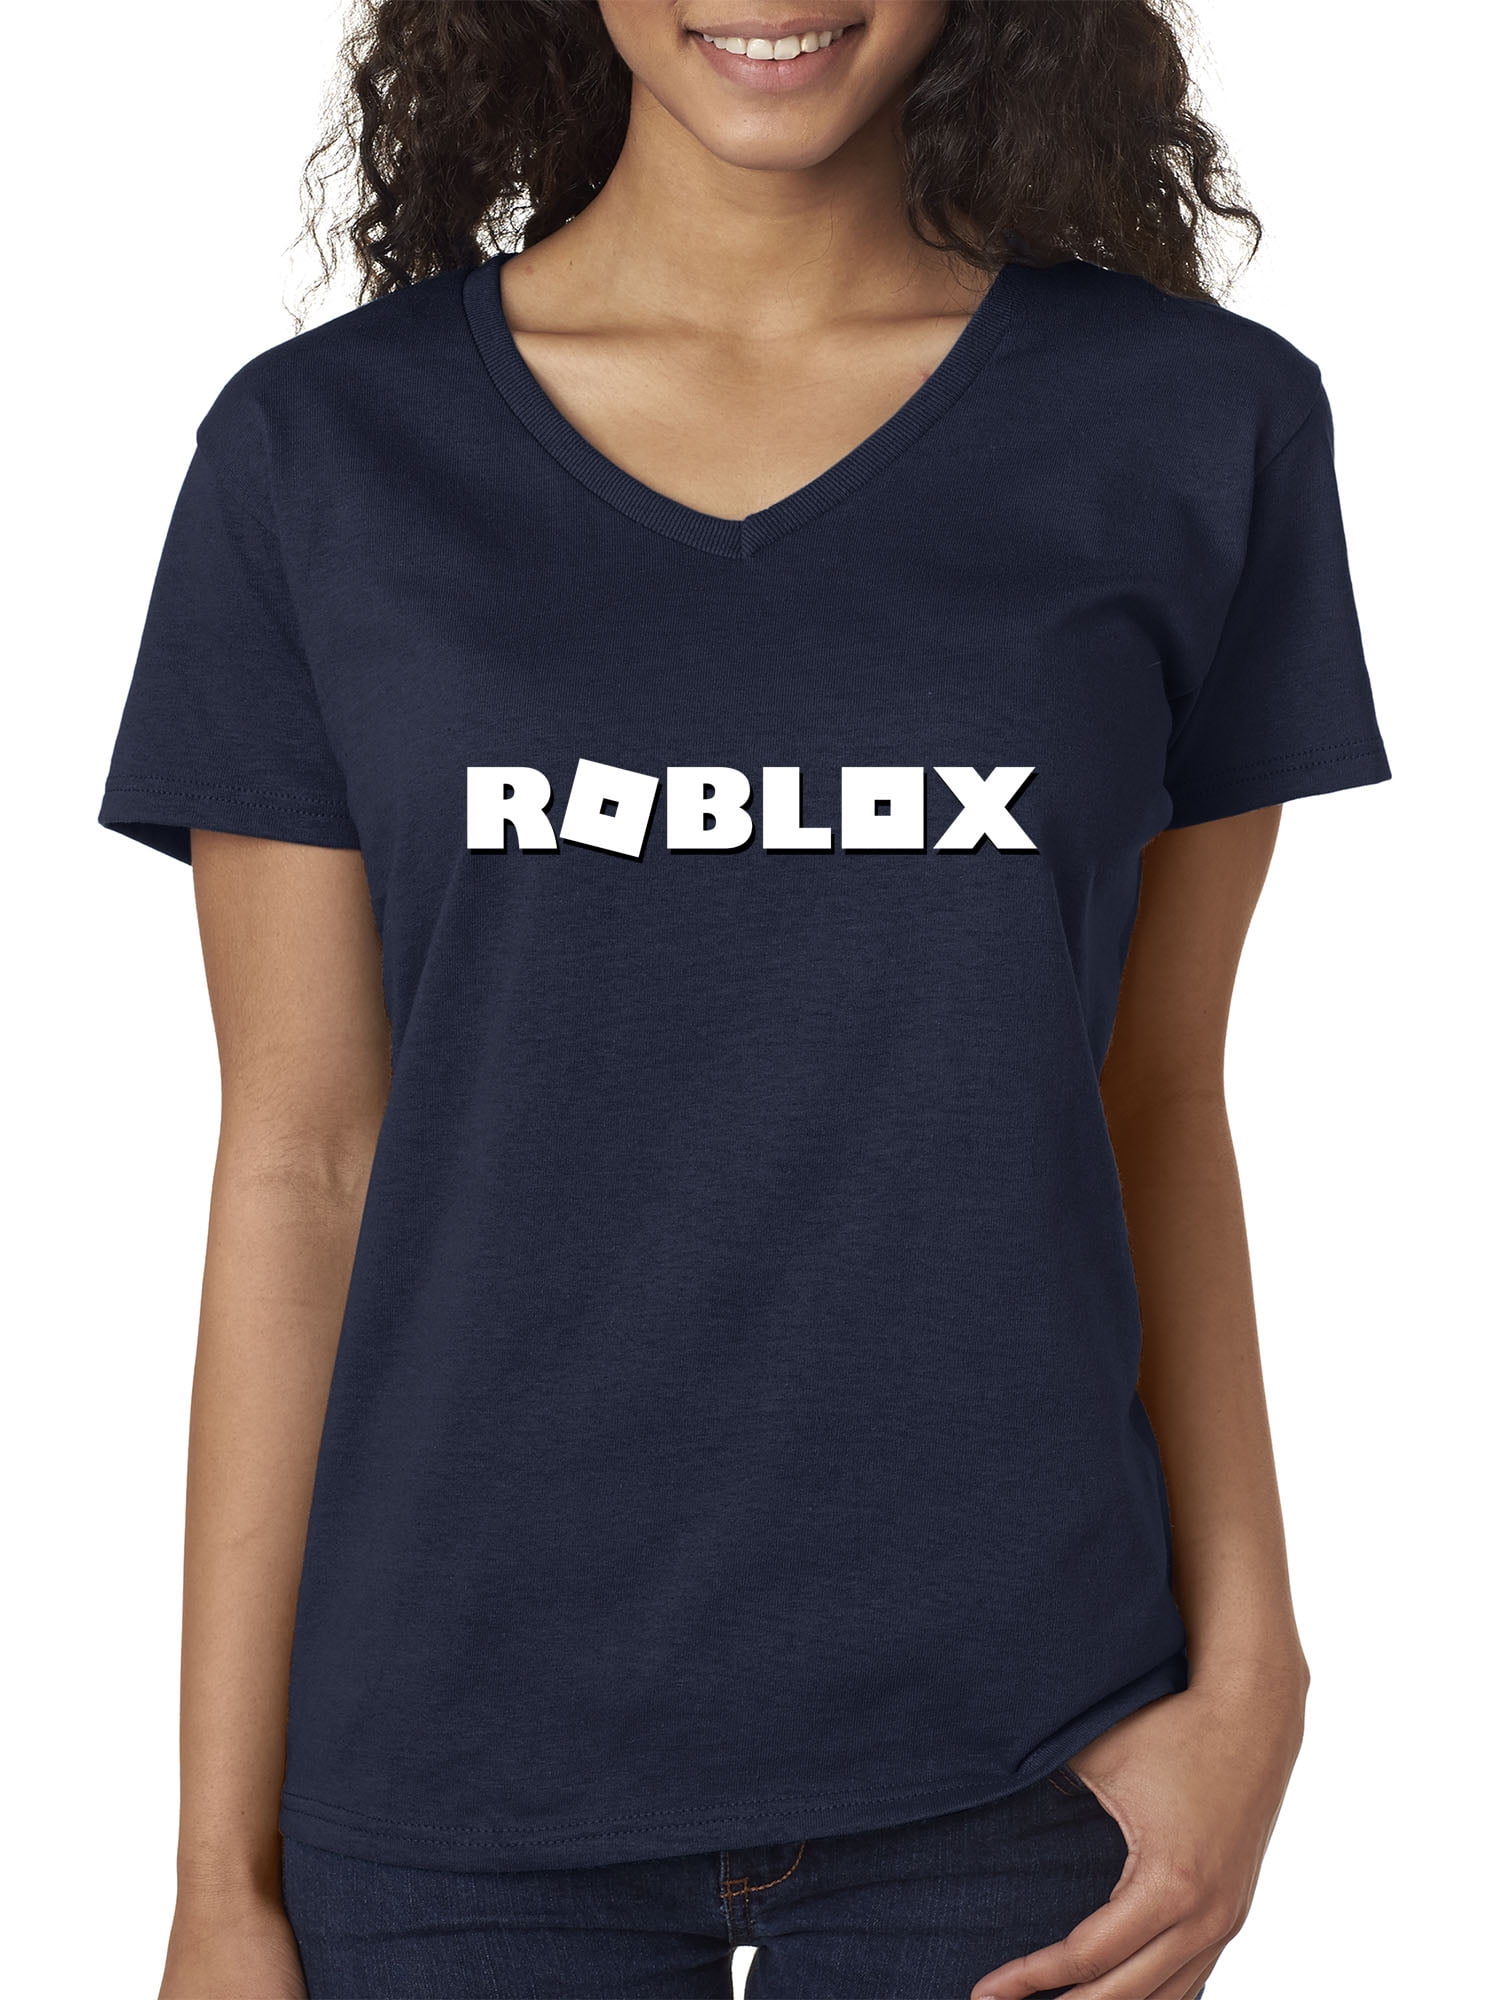 New Way New Way 923 Women S V Neck T Shirt Roblox Logo Game Accent 2xl Navy Walmart Com Walmart Com - navy turtle decal roblox